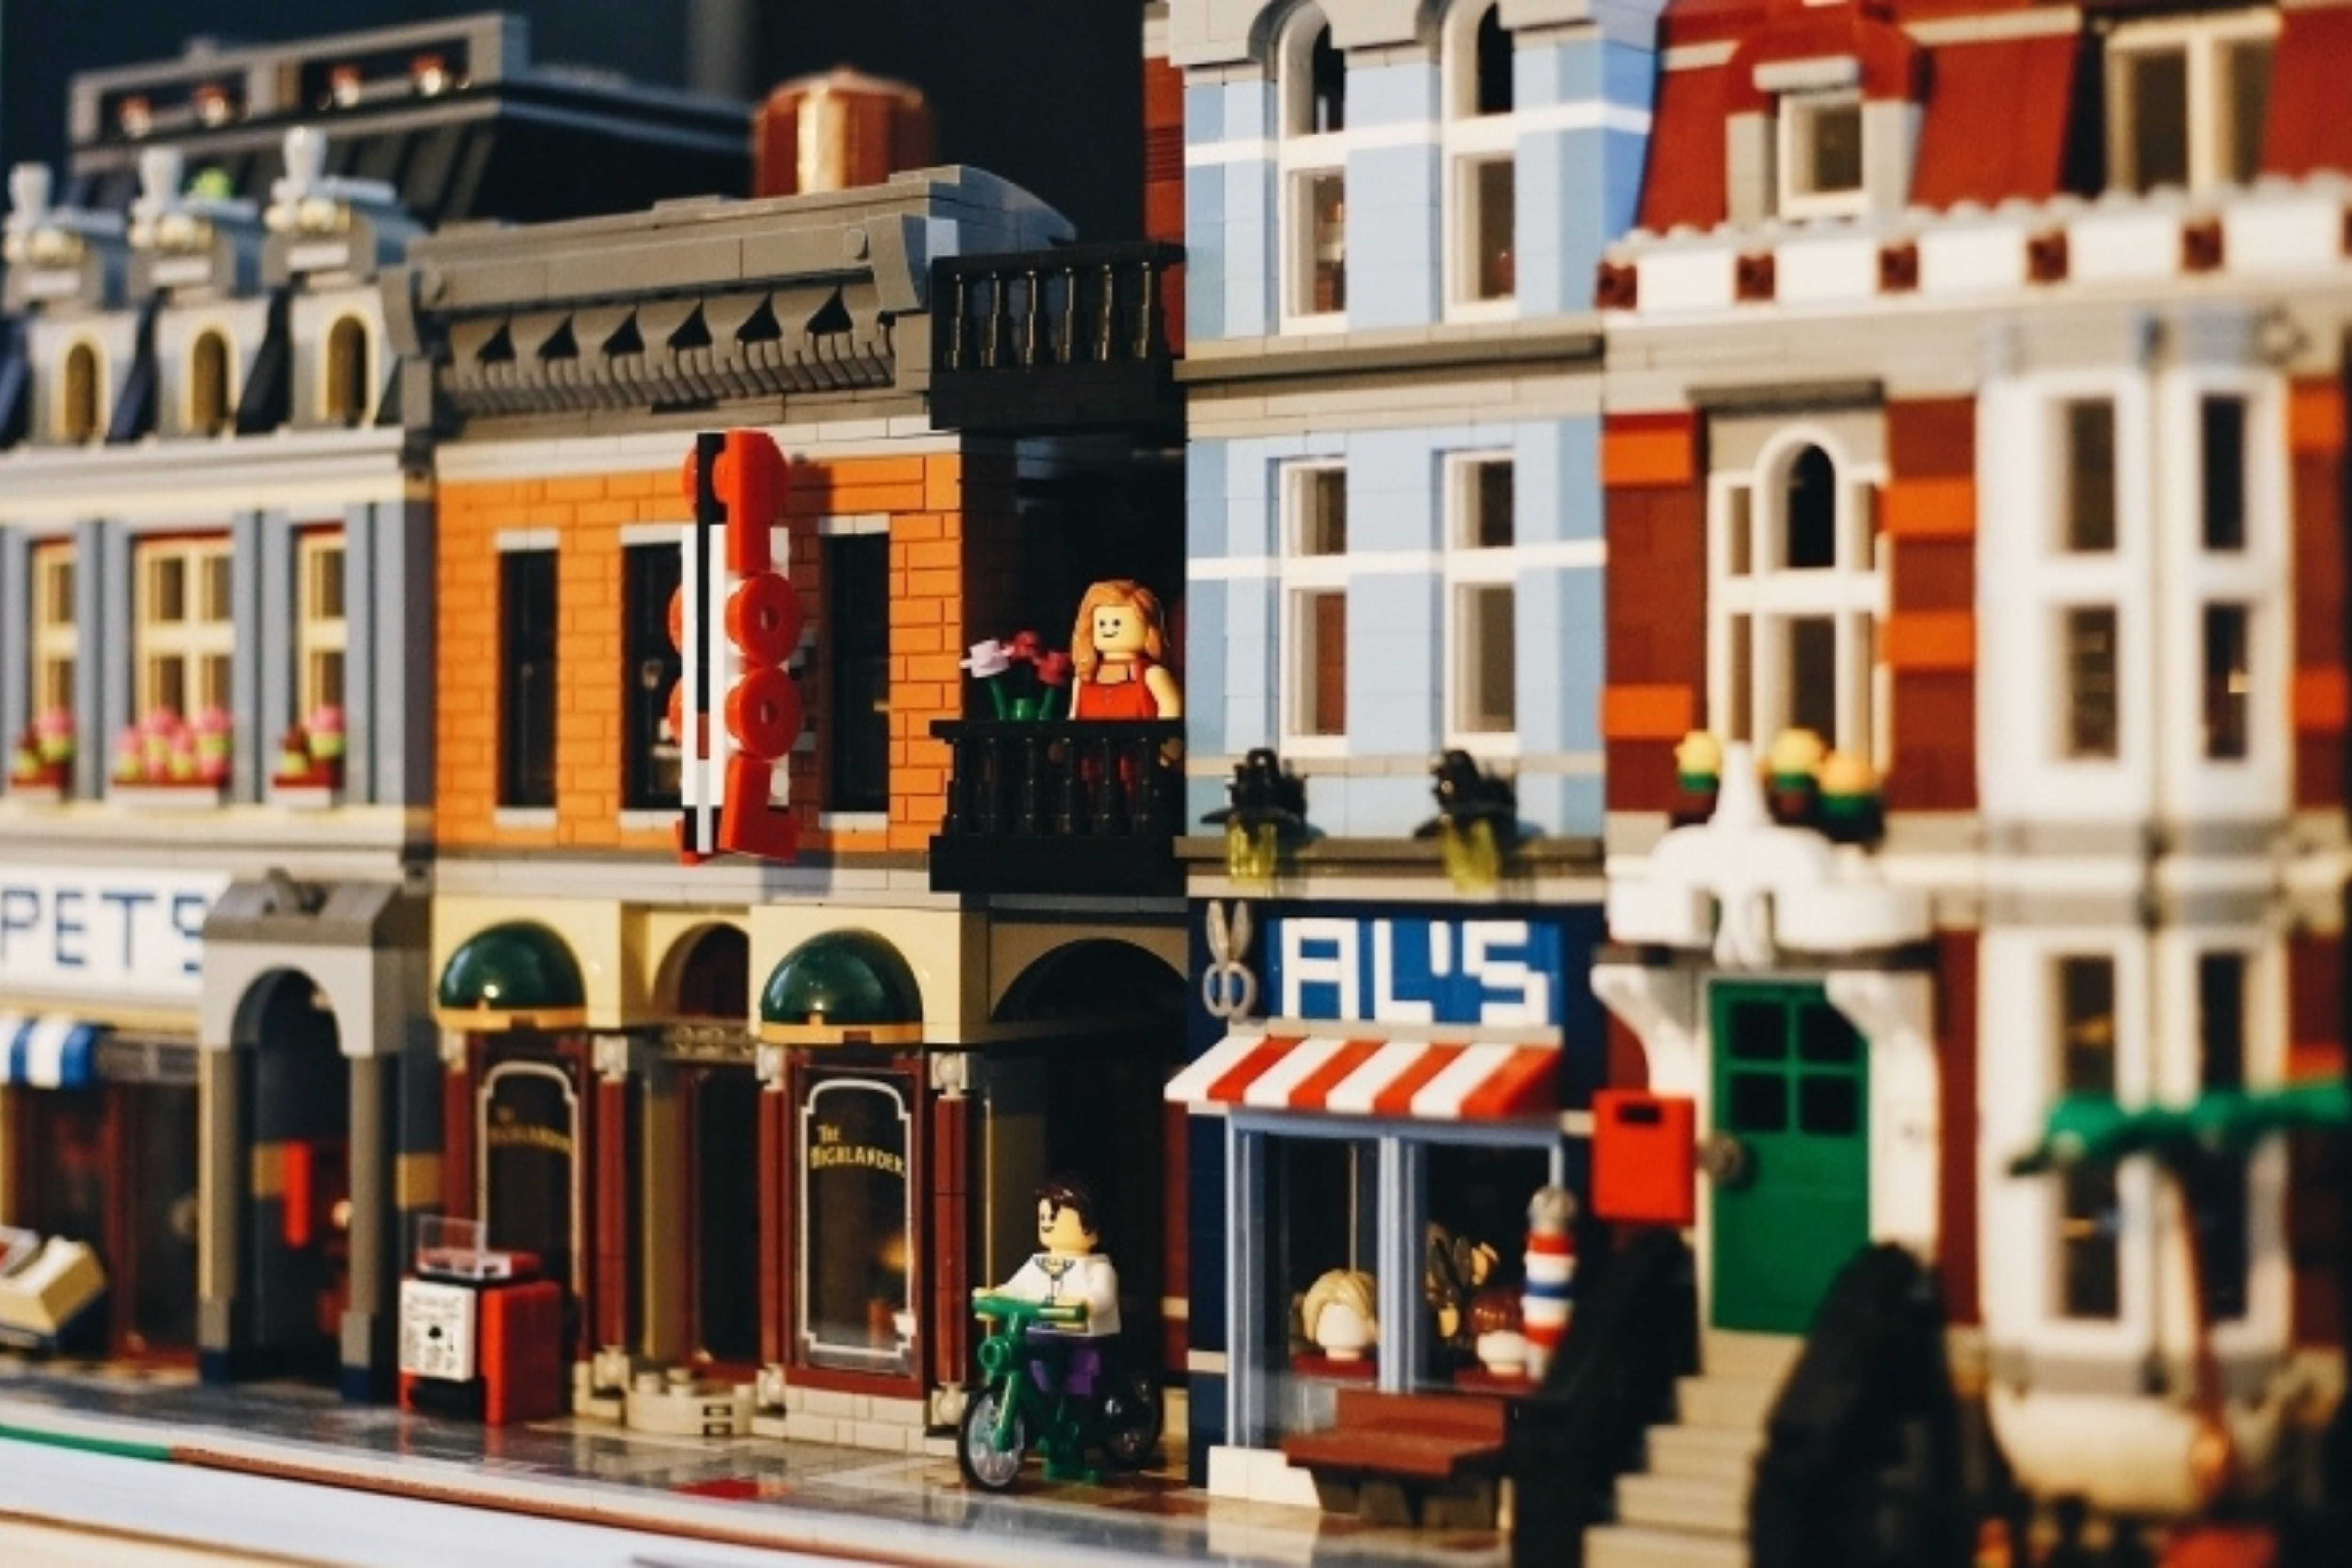 An introduction to Lego Dioramas